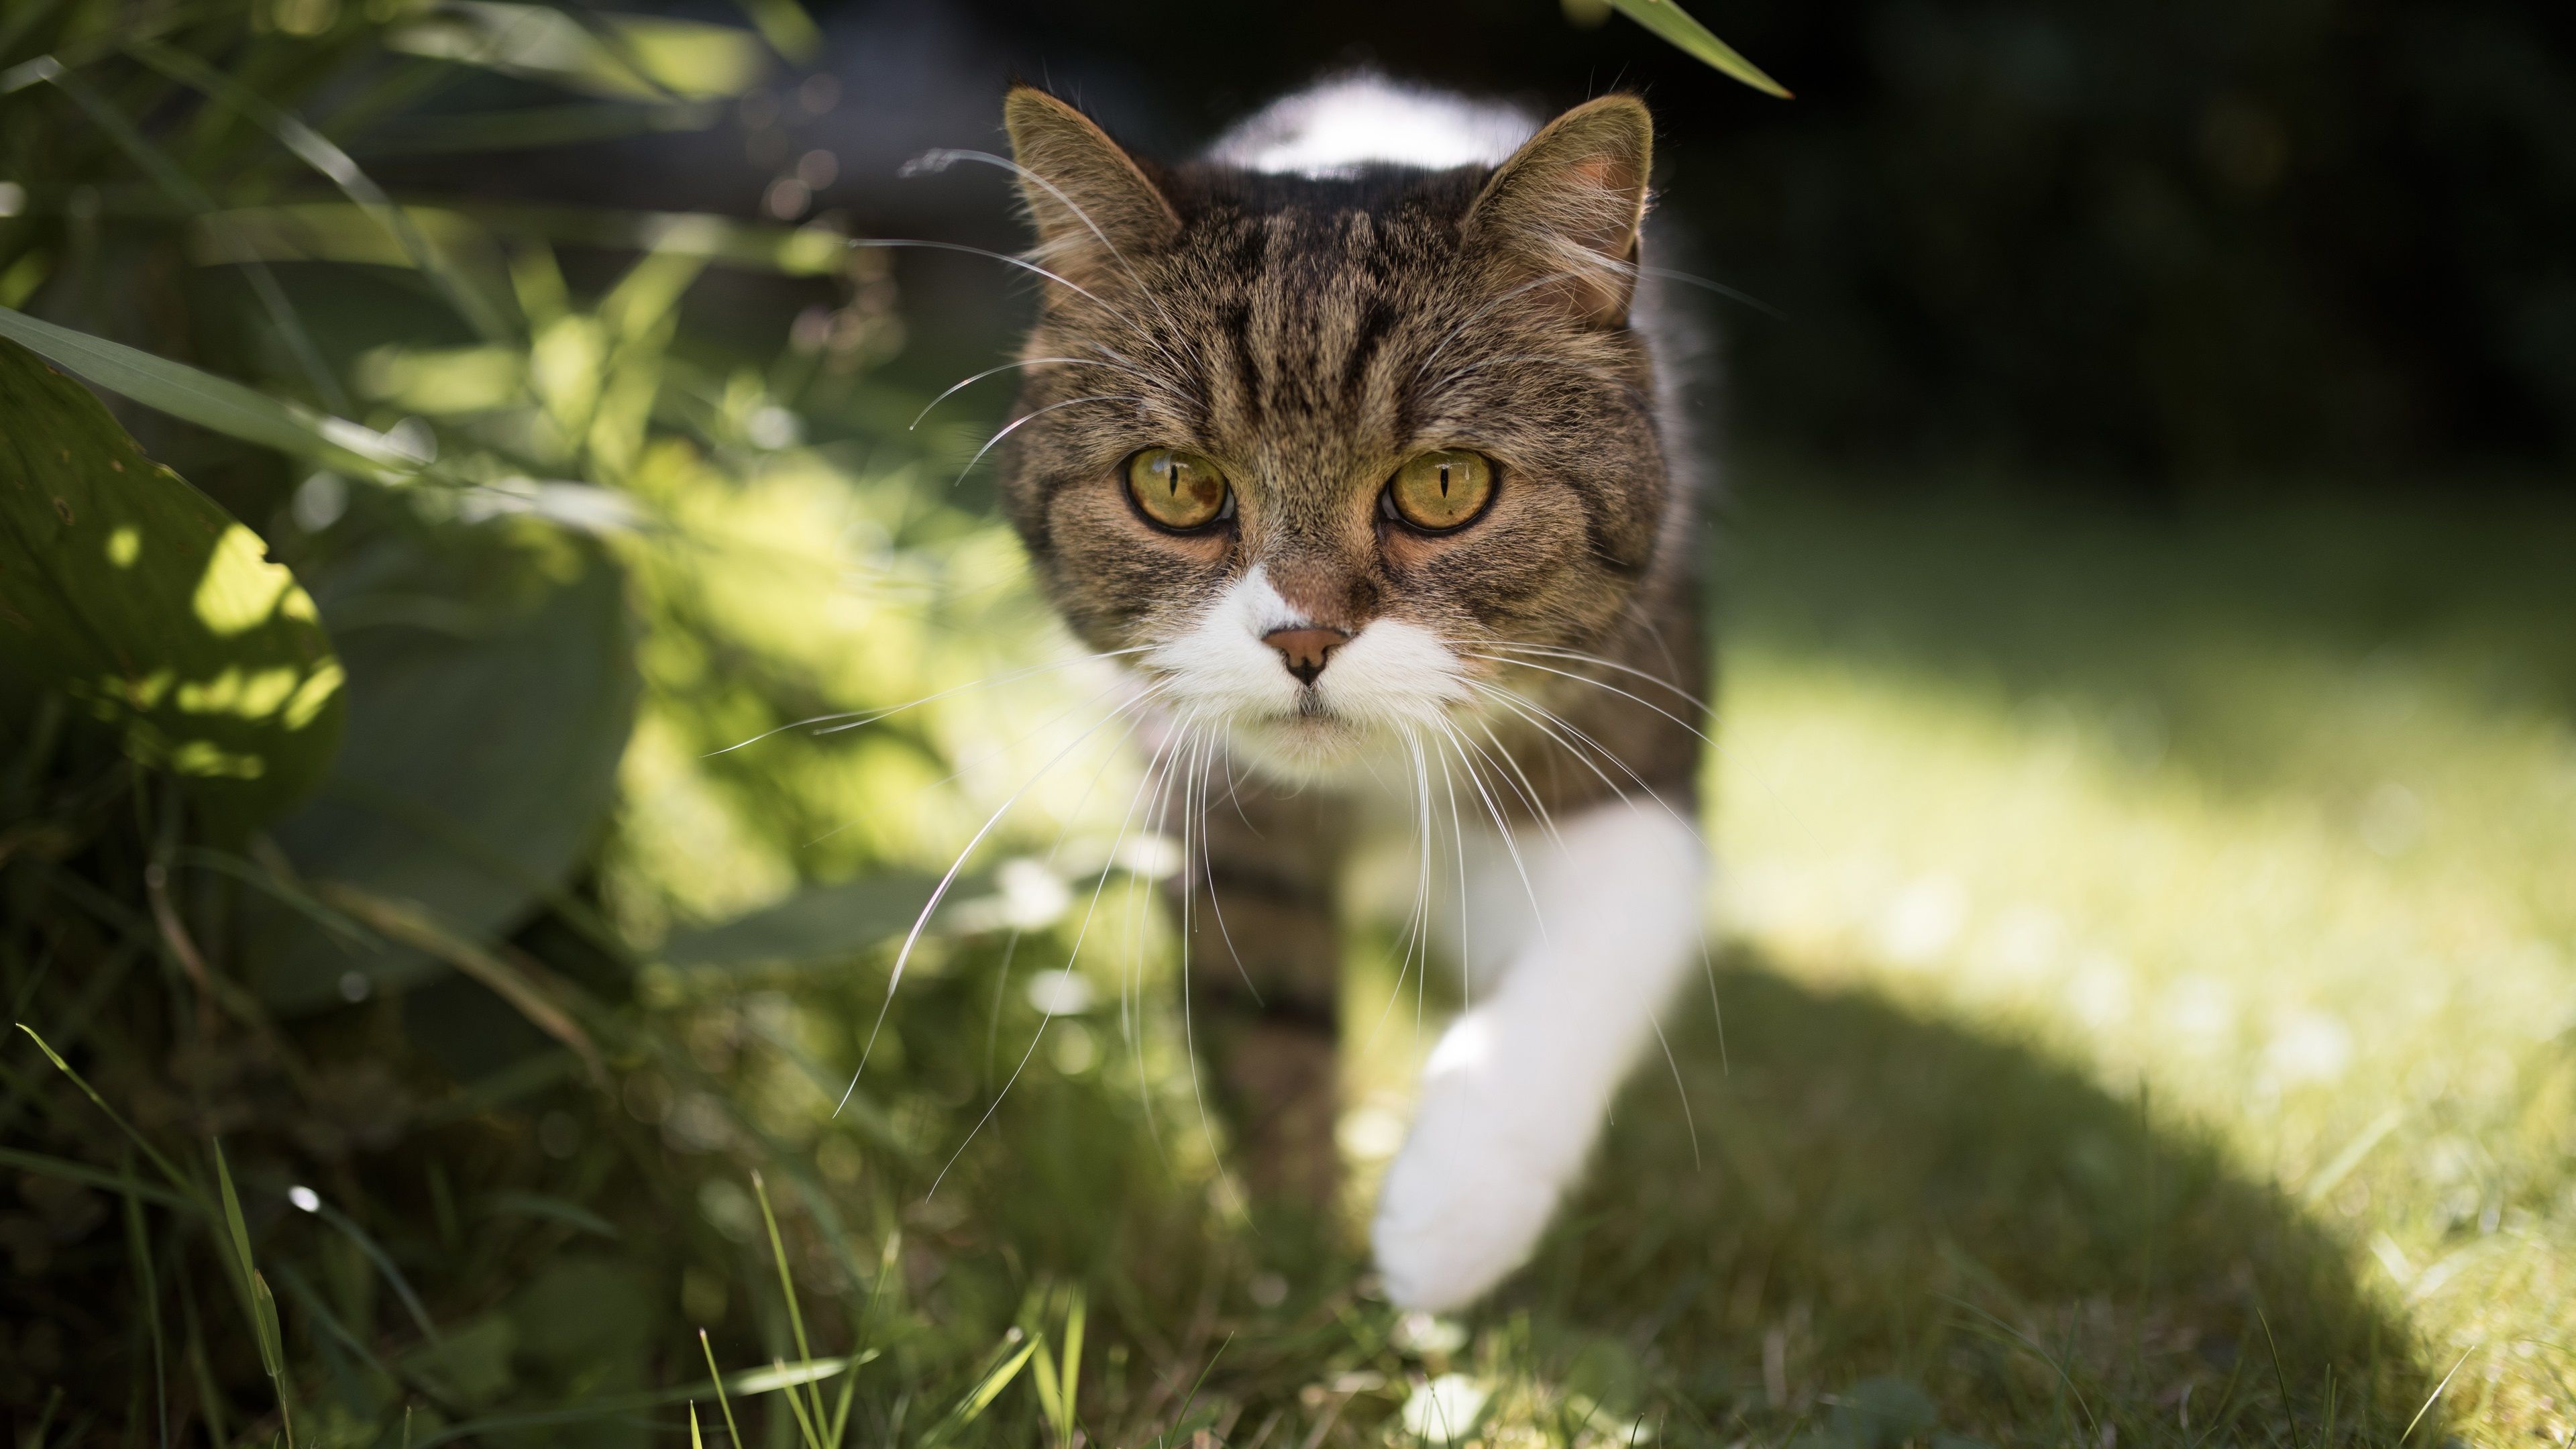 Wallpaper Cat walking in the grass at summer 3840x2160 UHD 4K